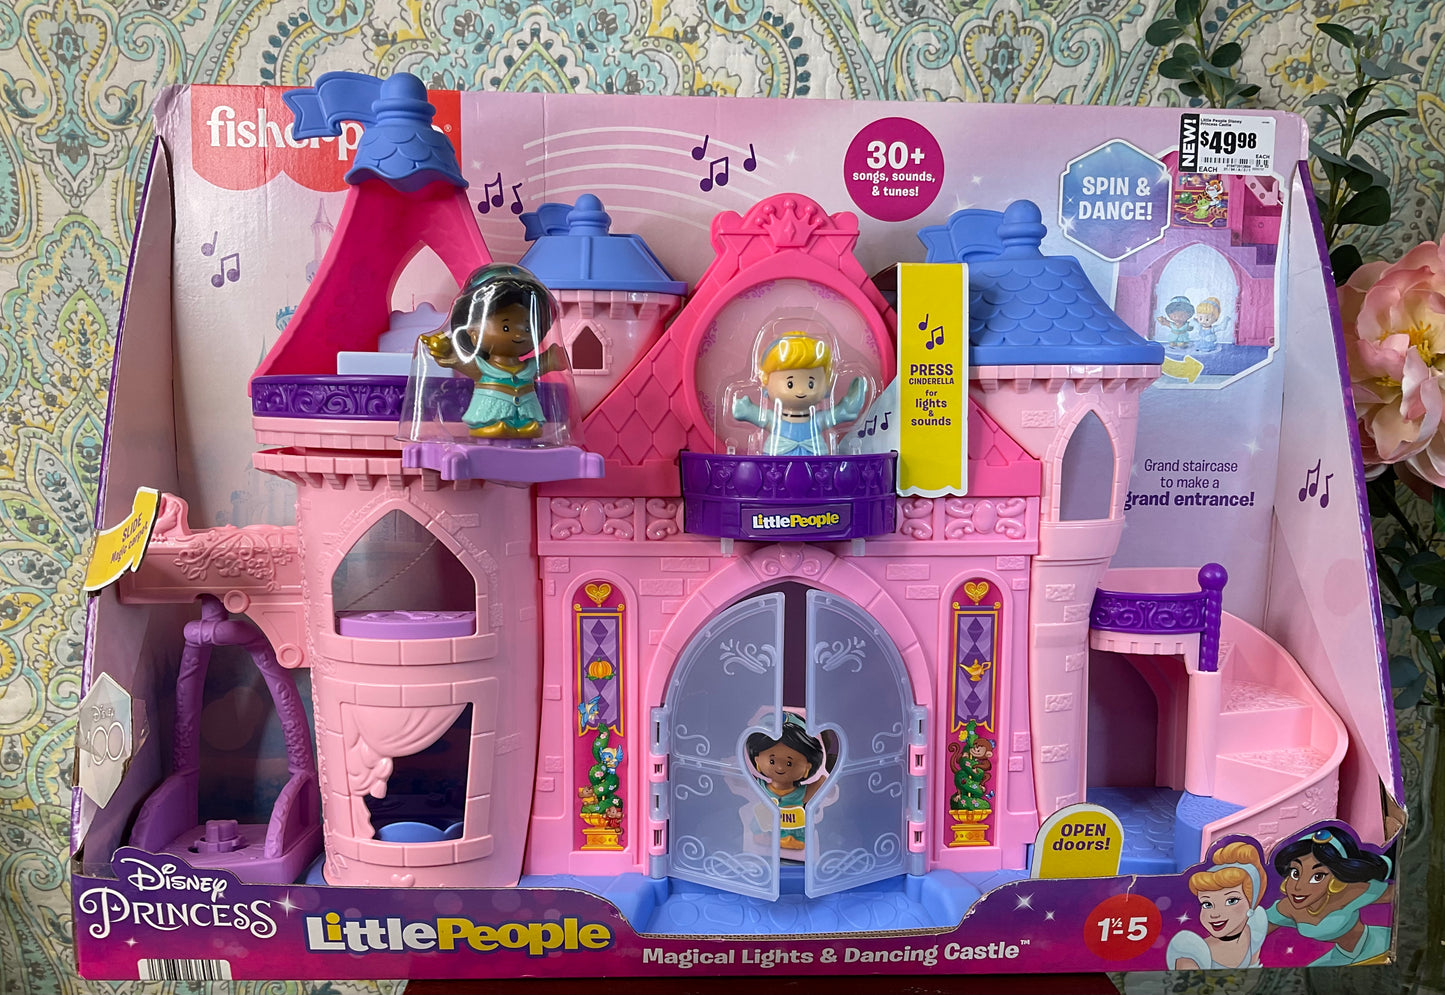 Fisher Price Little People Disney Princess Magical Lights & Dancing Castle